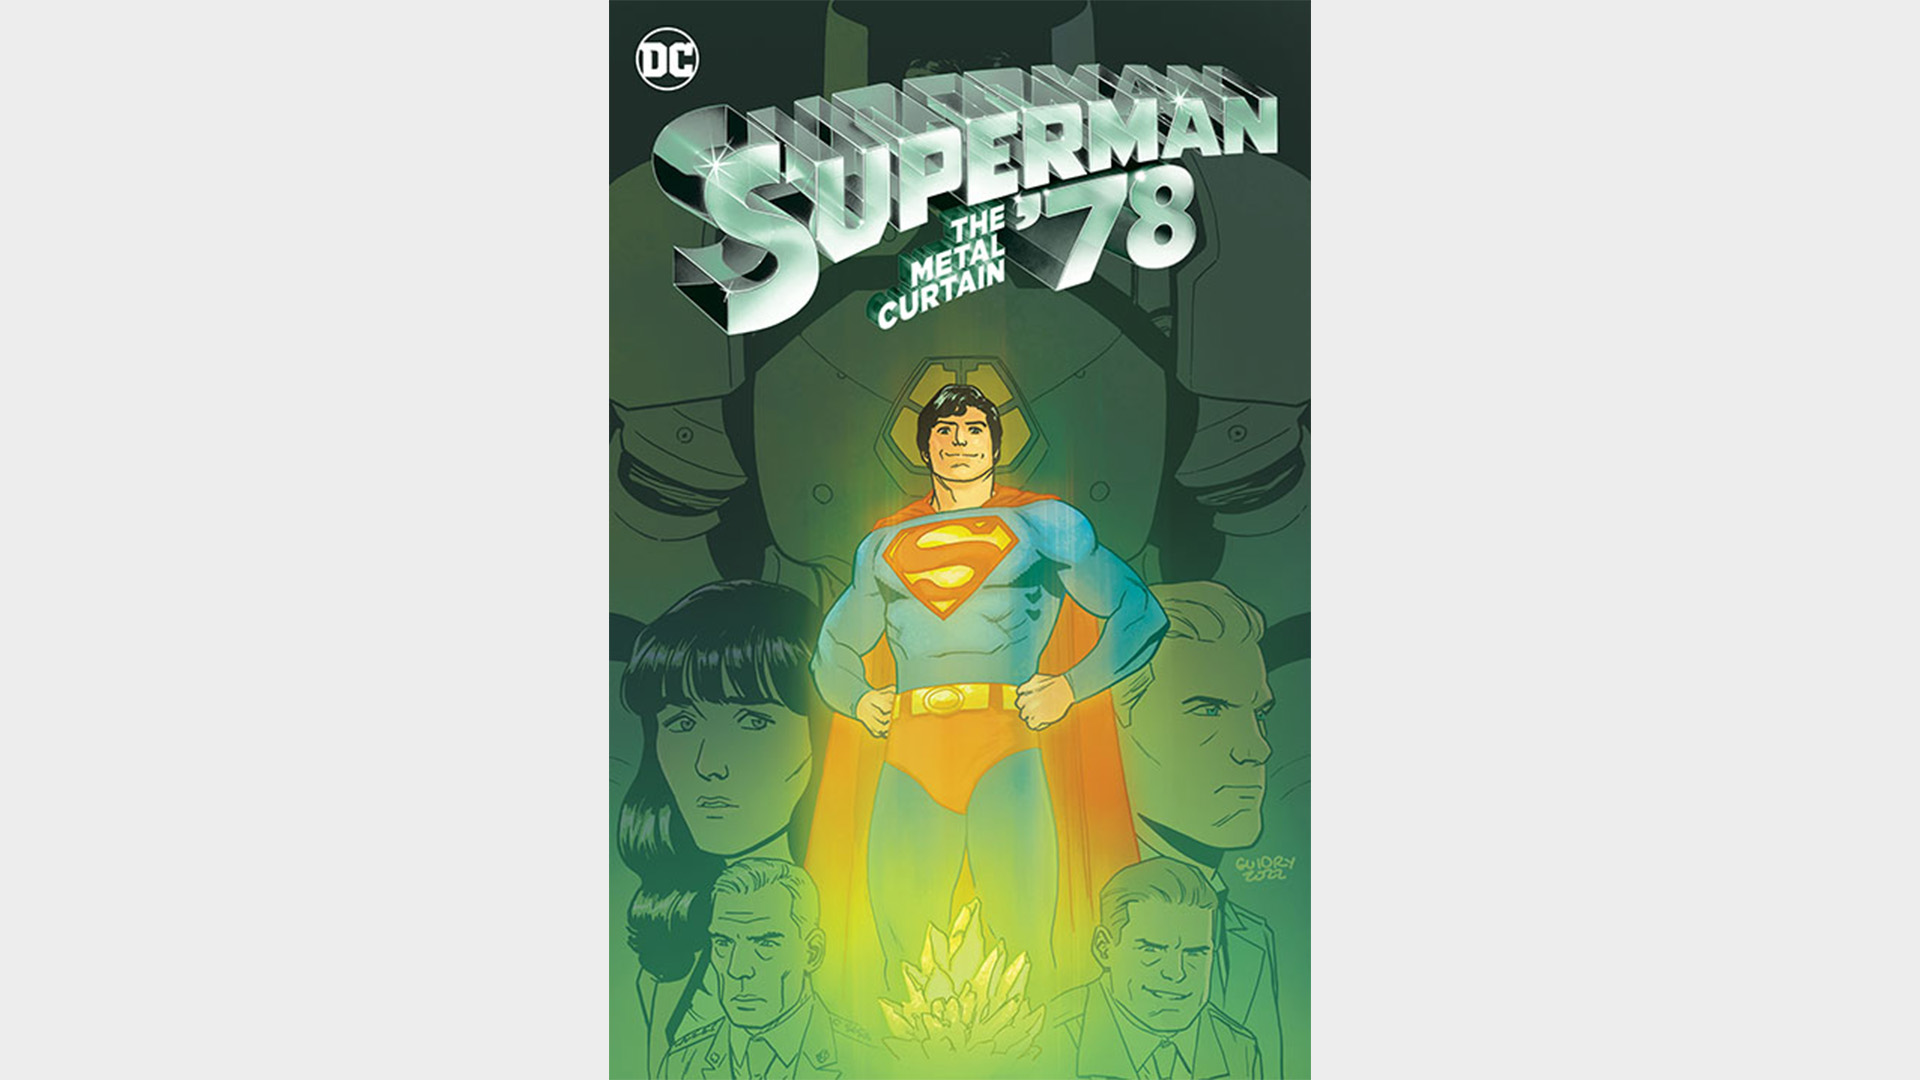 SUPERMAN ’78: THE METAL CURTAIN